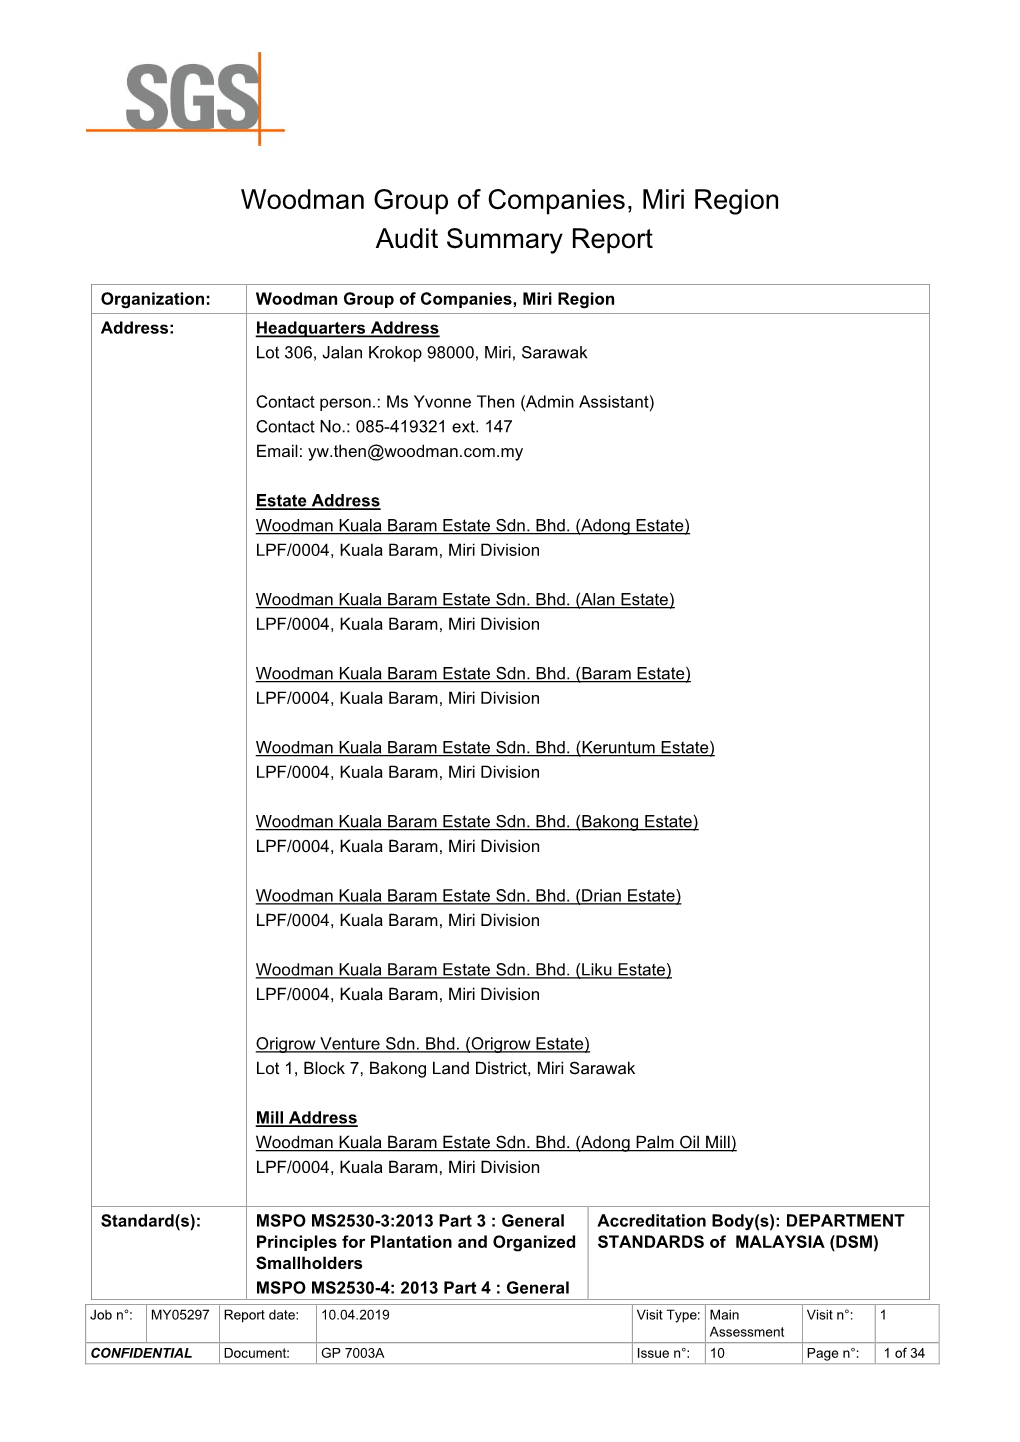 Woodman Group of Companies, Miri Region Audit Summary Report